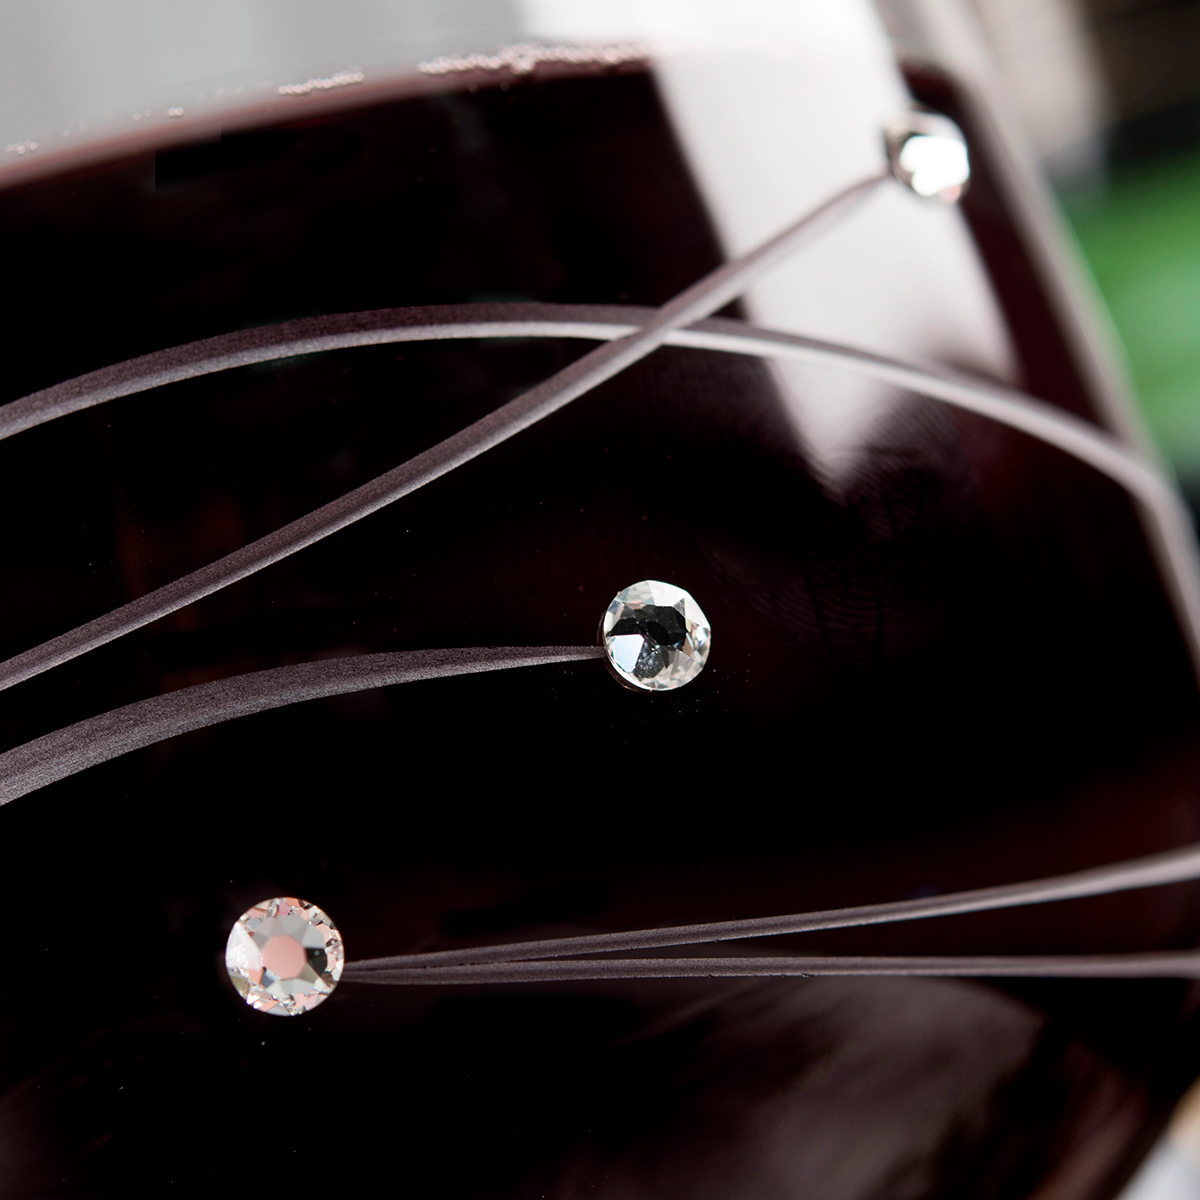 Engraved Swarovski Diamante Wine Glass - On Your Anniversary